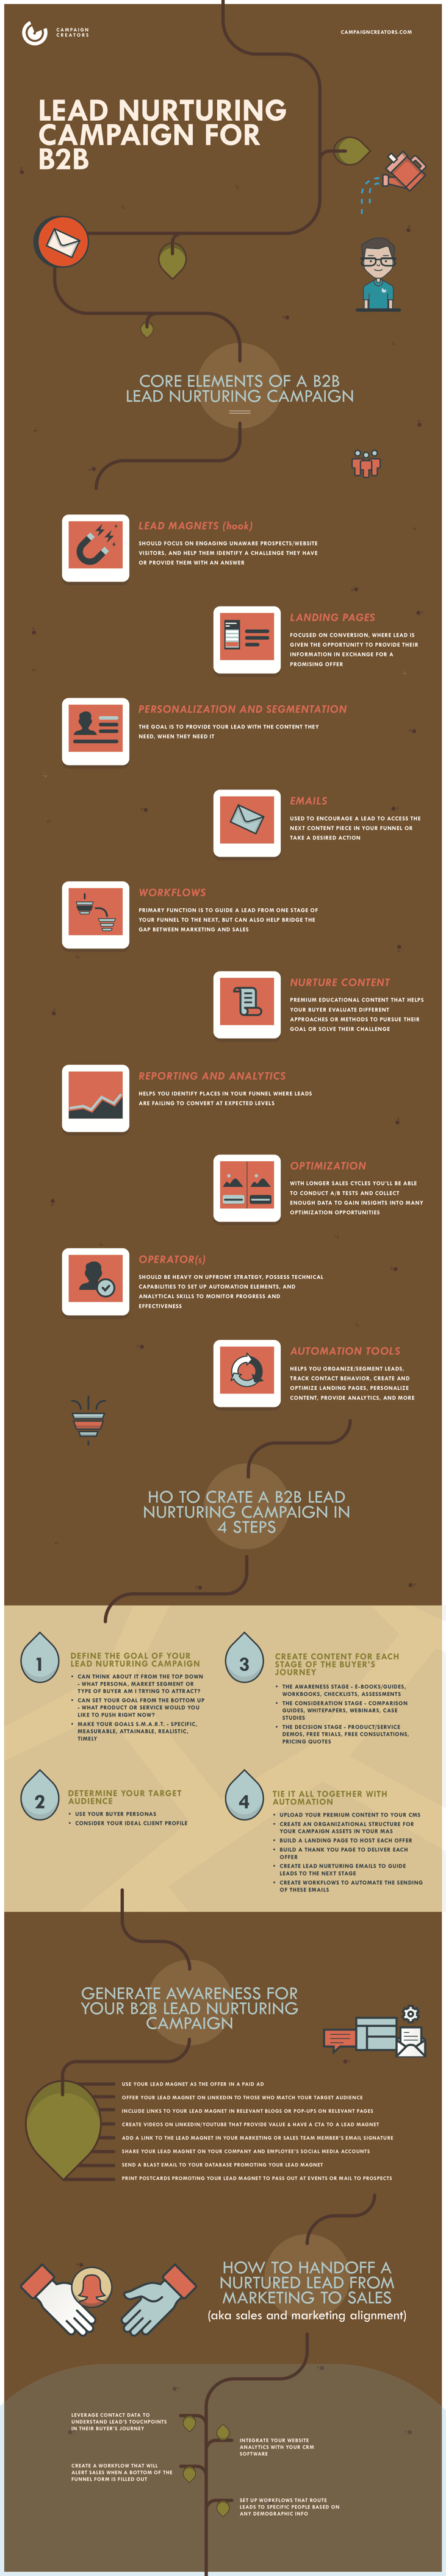 CC - Lead Nurturing Campaign for B2B - Lesson 7 Infographic